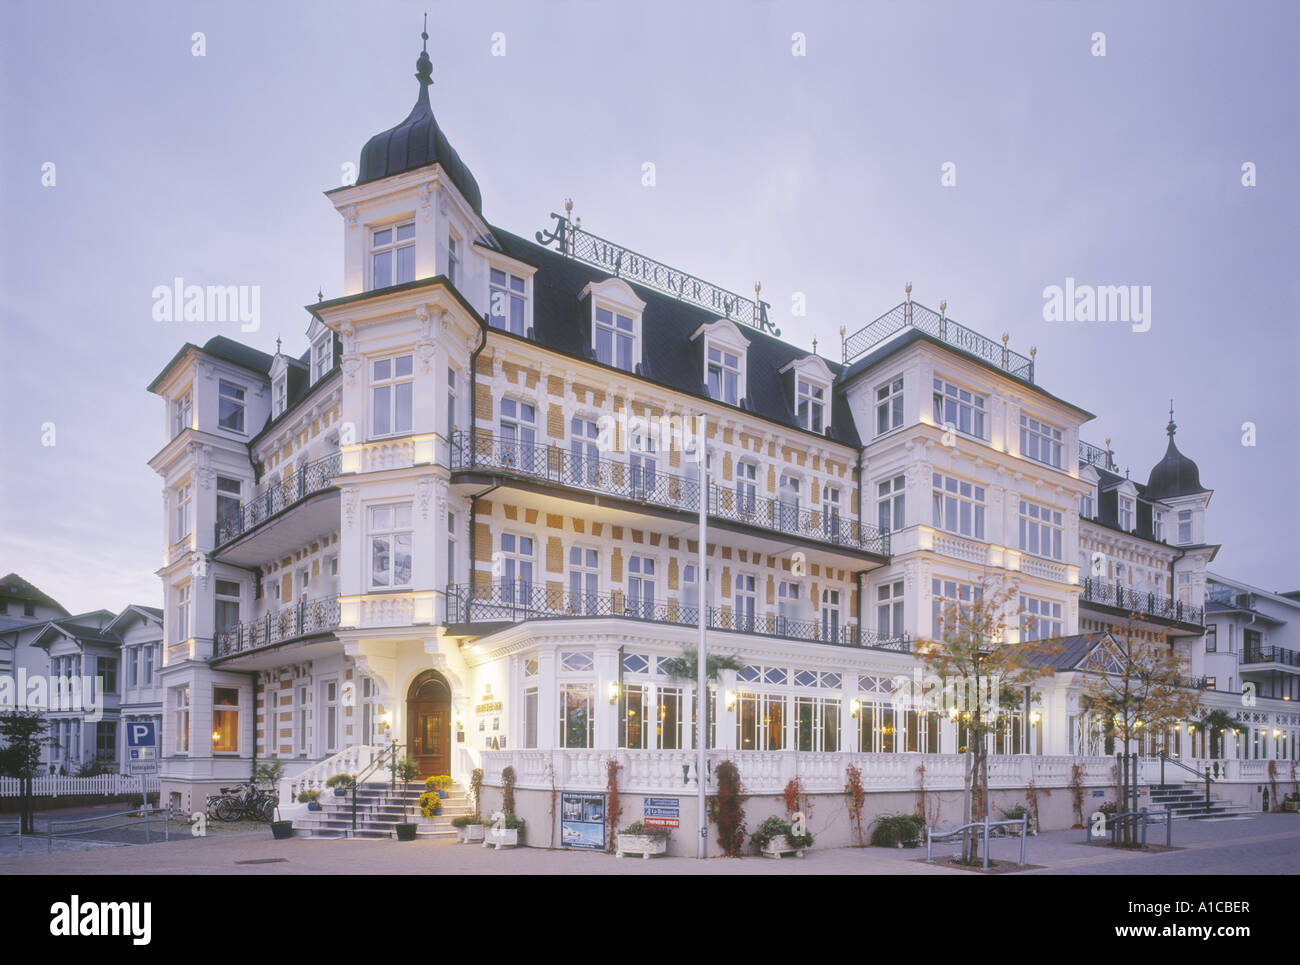 Hotel Ahlbecker Hof nahe Promenade, Ahlbeck, Usedom, Mecklenburg-Vorpommern, Deutschland Stockfoto